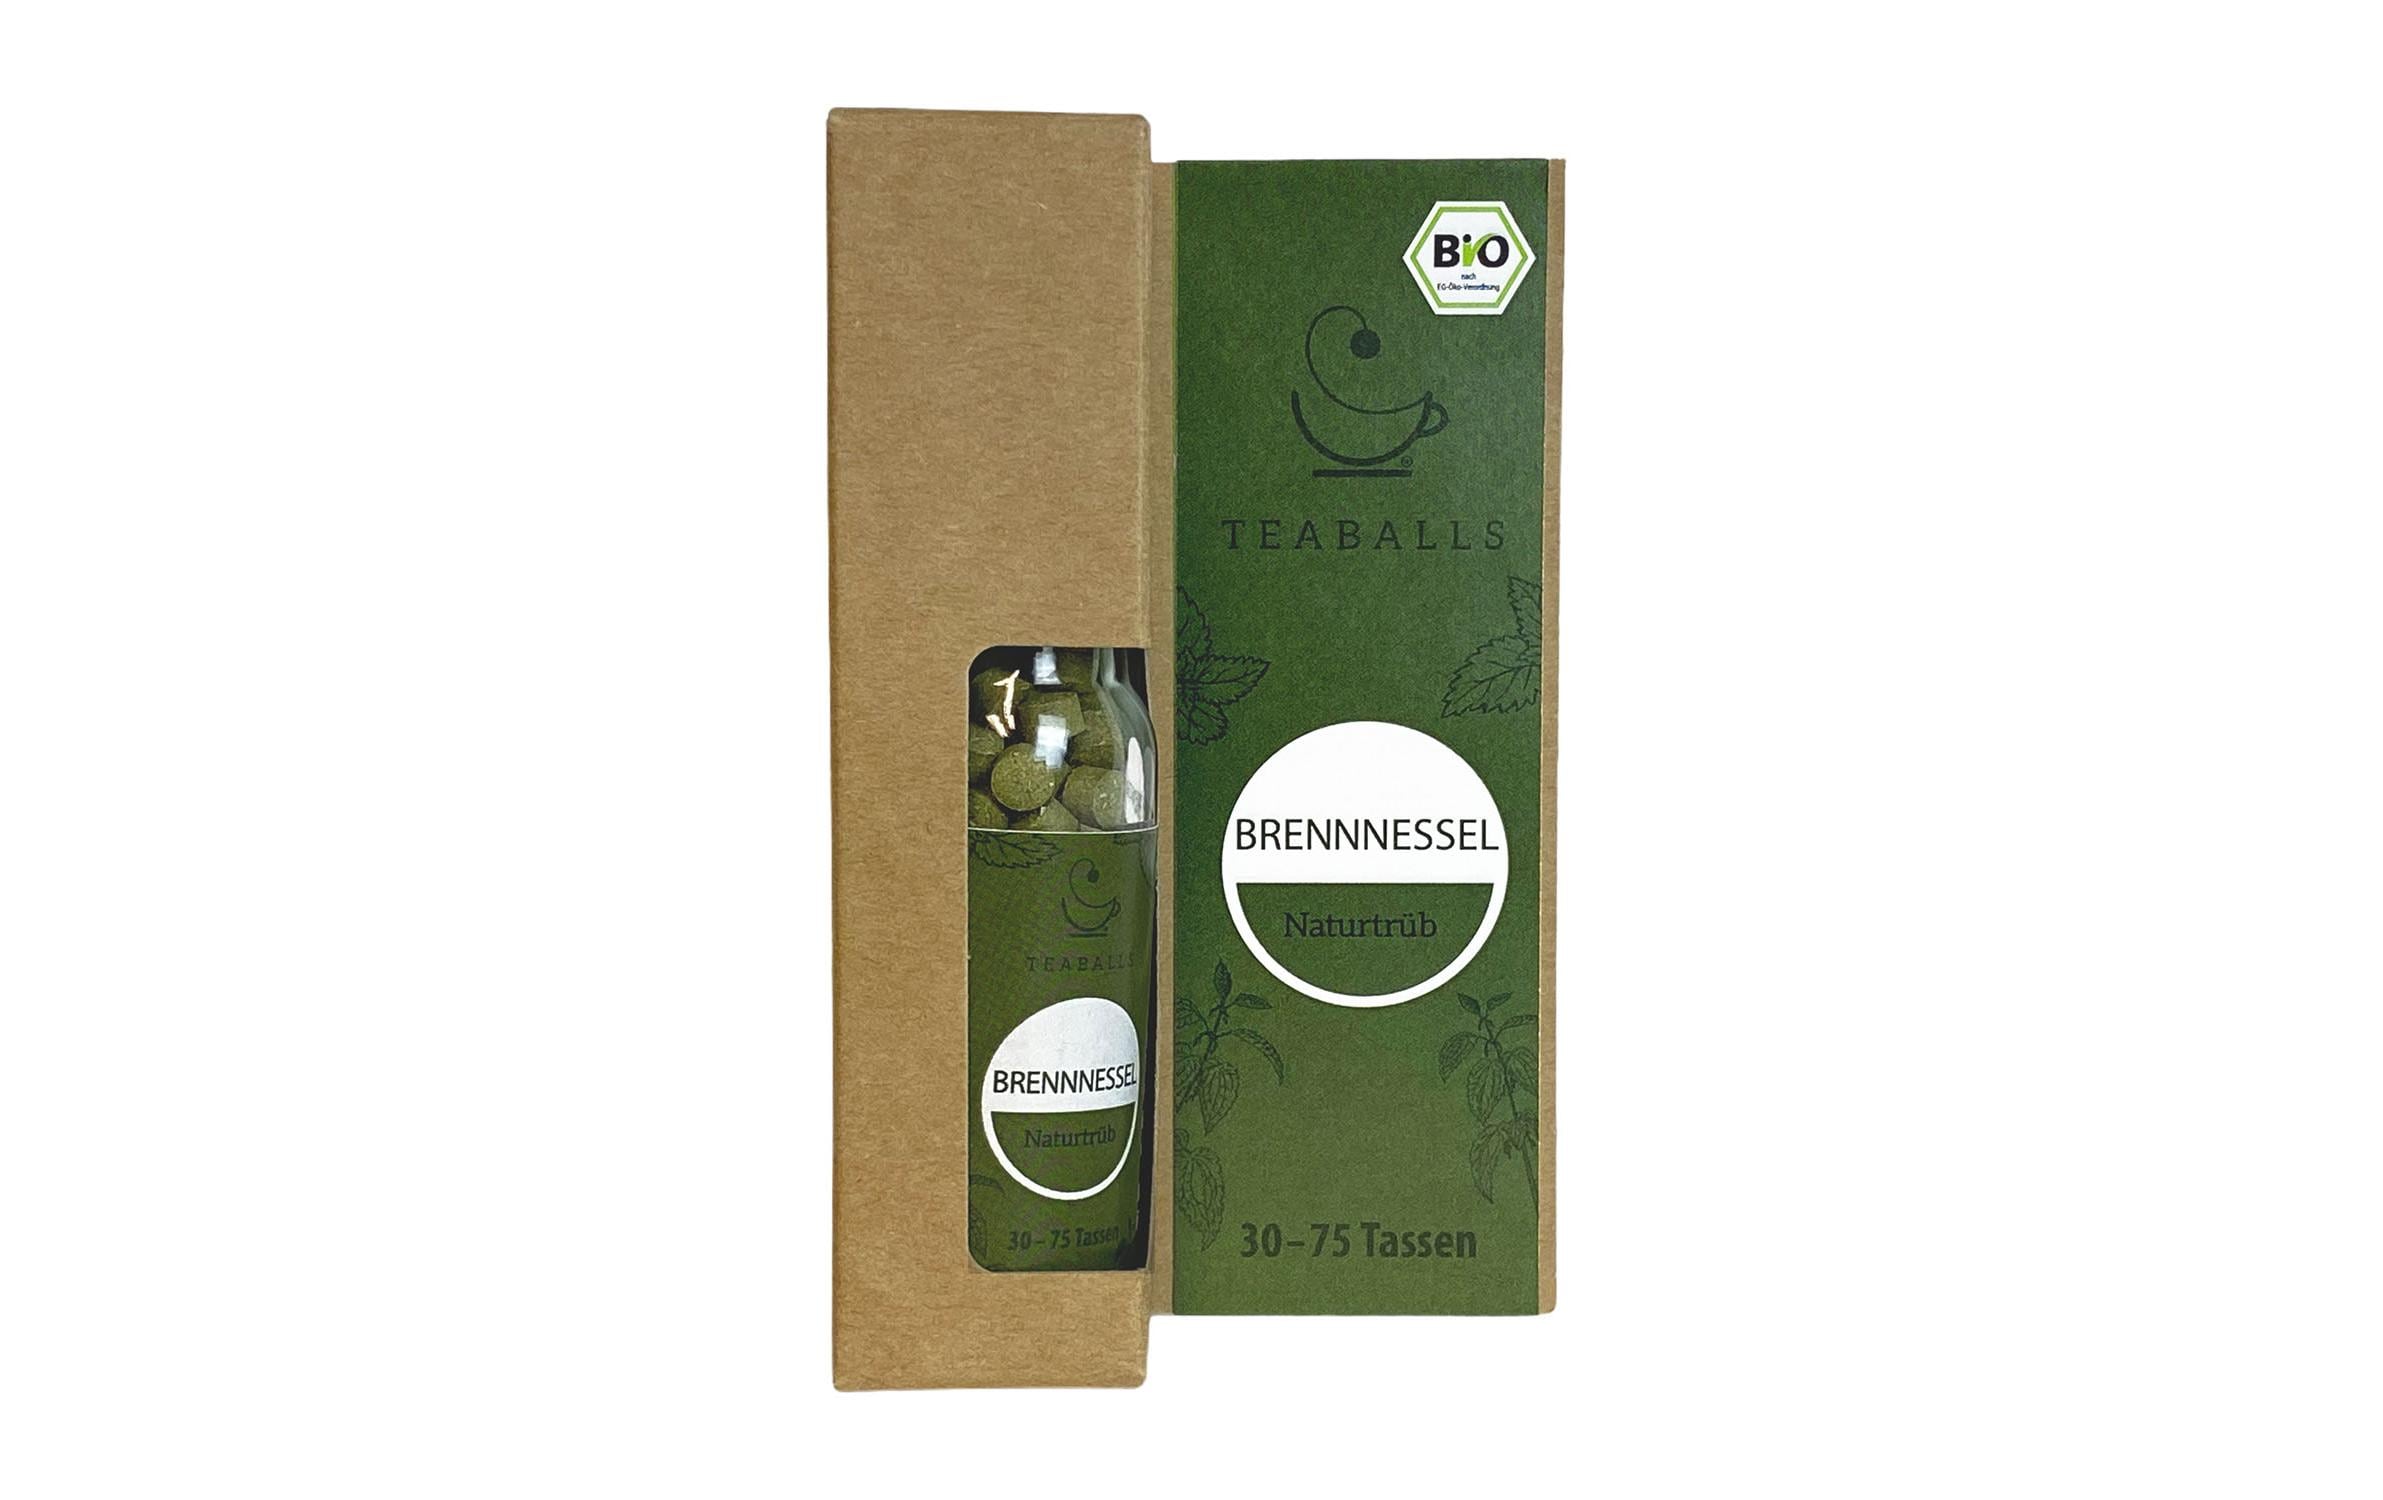 TEABALLS Teaballs Brennessel Bio naturtrüb 30-75 Tassen